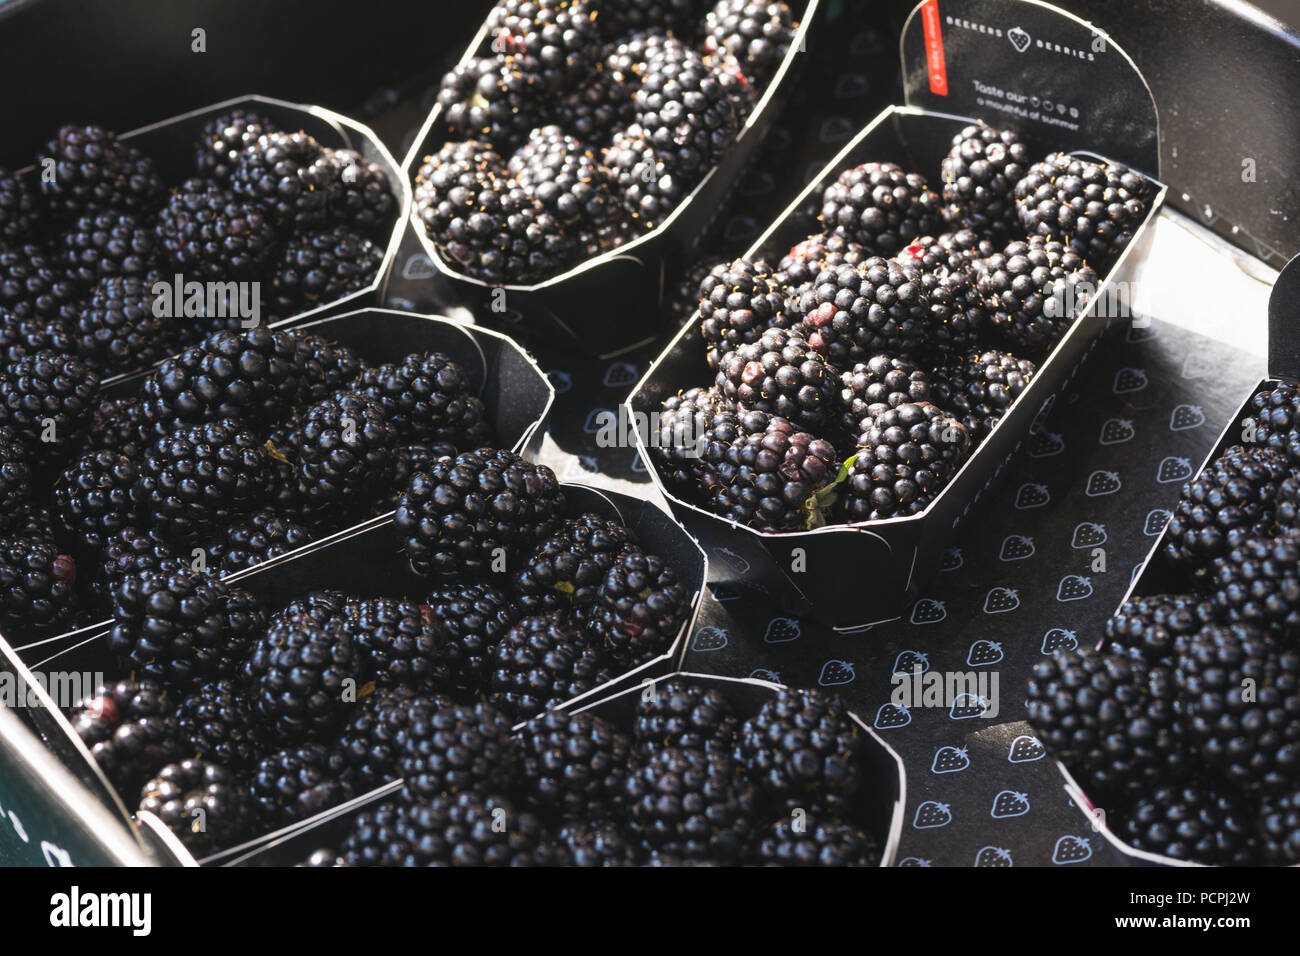 https://c8.alamy.com/comp/PCPJ2W/fruit-blackberry-ripe-blackberry-rubus-fruit-on-display-on-a-farmers-market-stand-france-europe-PCPJ2W.jpg